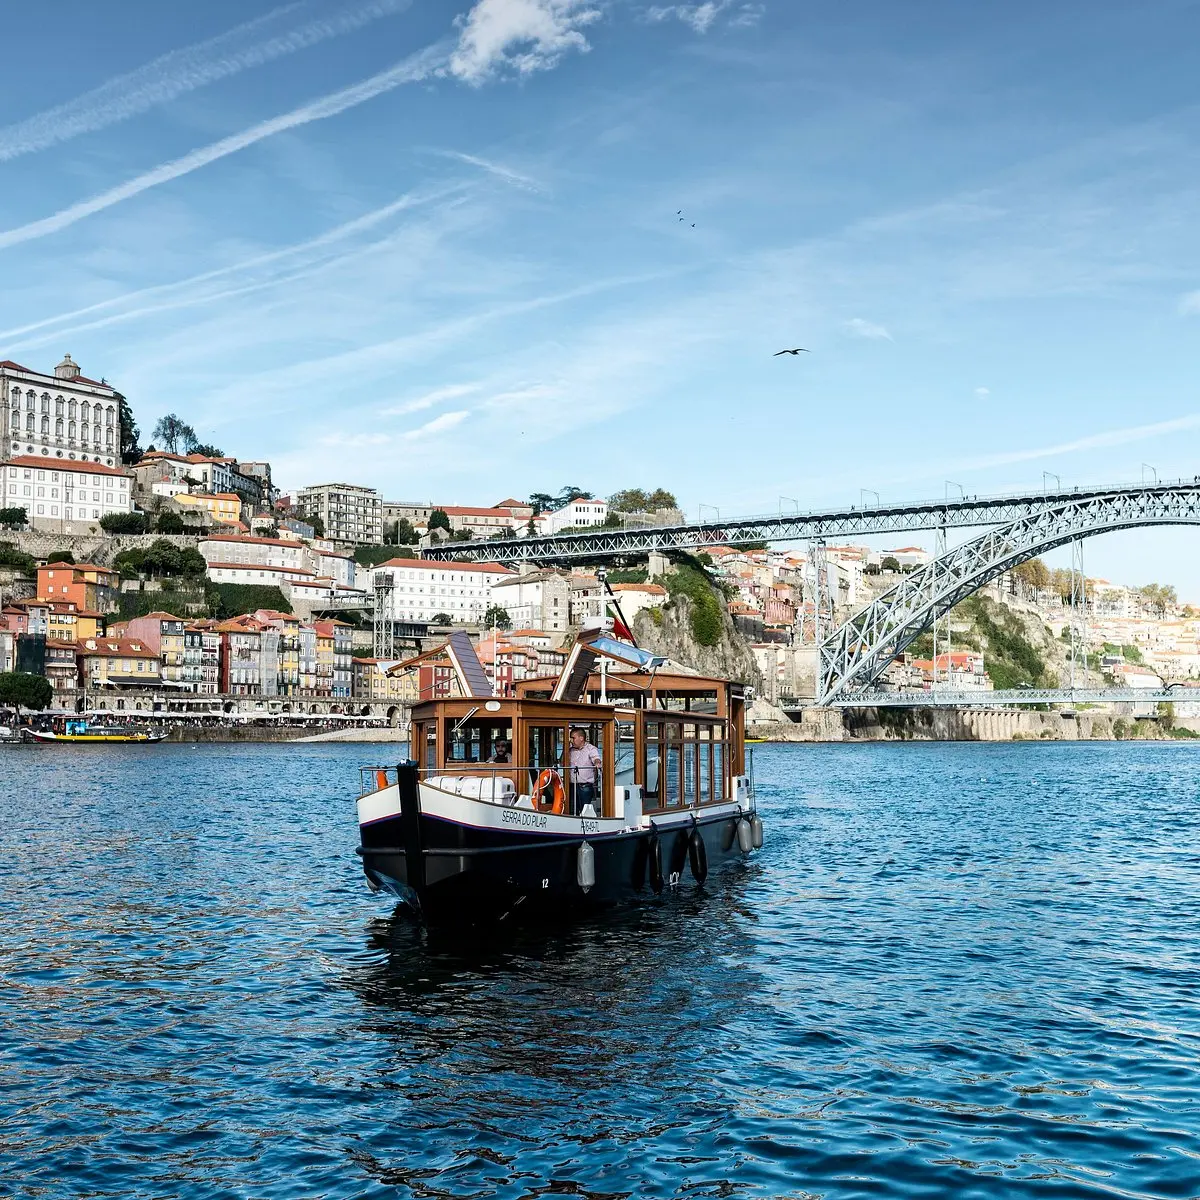 douro river taxi price - How do you get across the Douro river